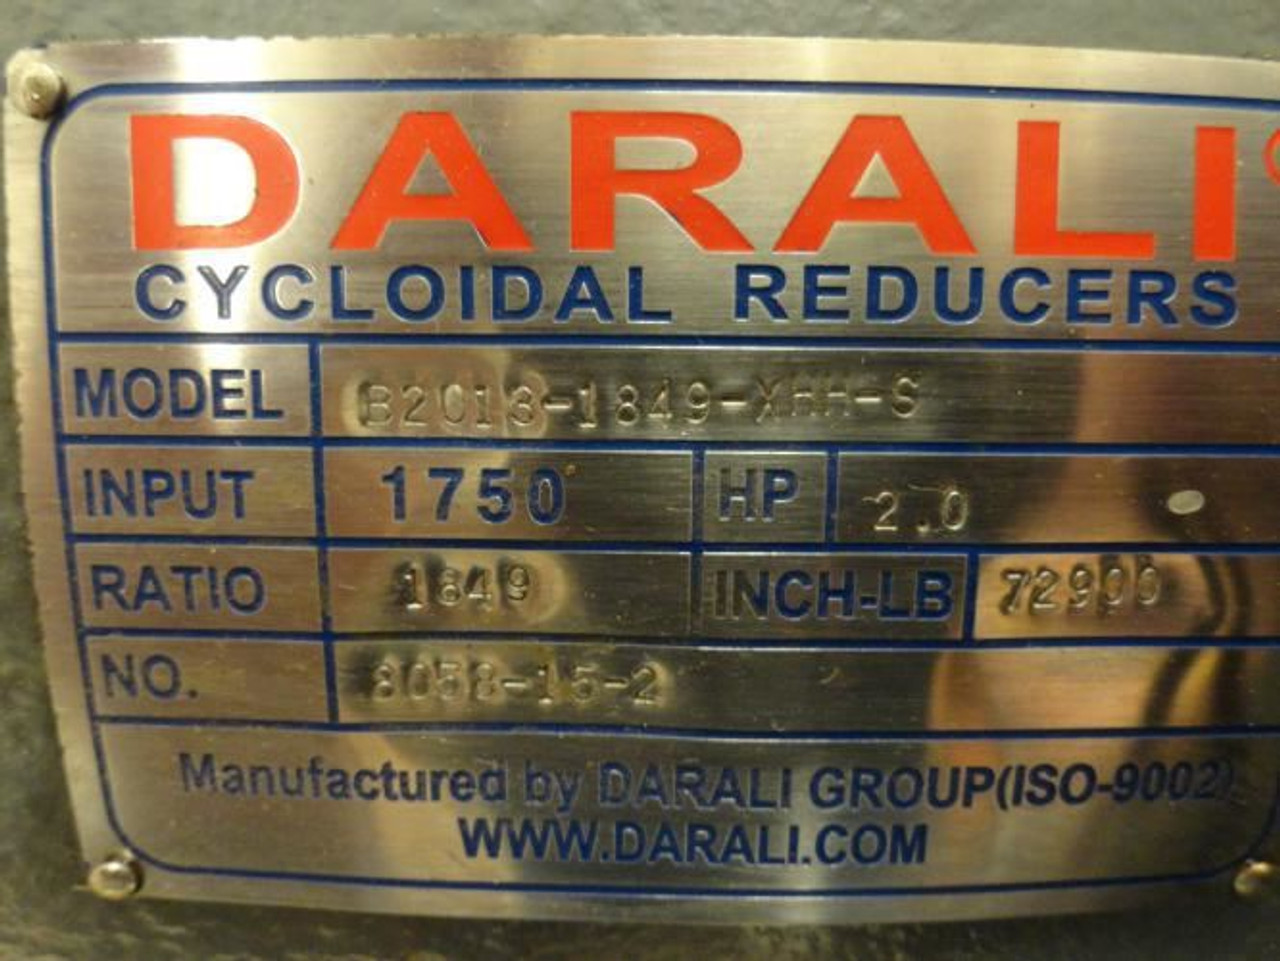 Darali B2013-1849-XHH-S; Cycloidal Reducer; 1849:1 Ratio